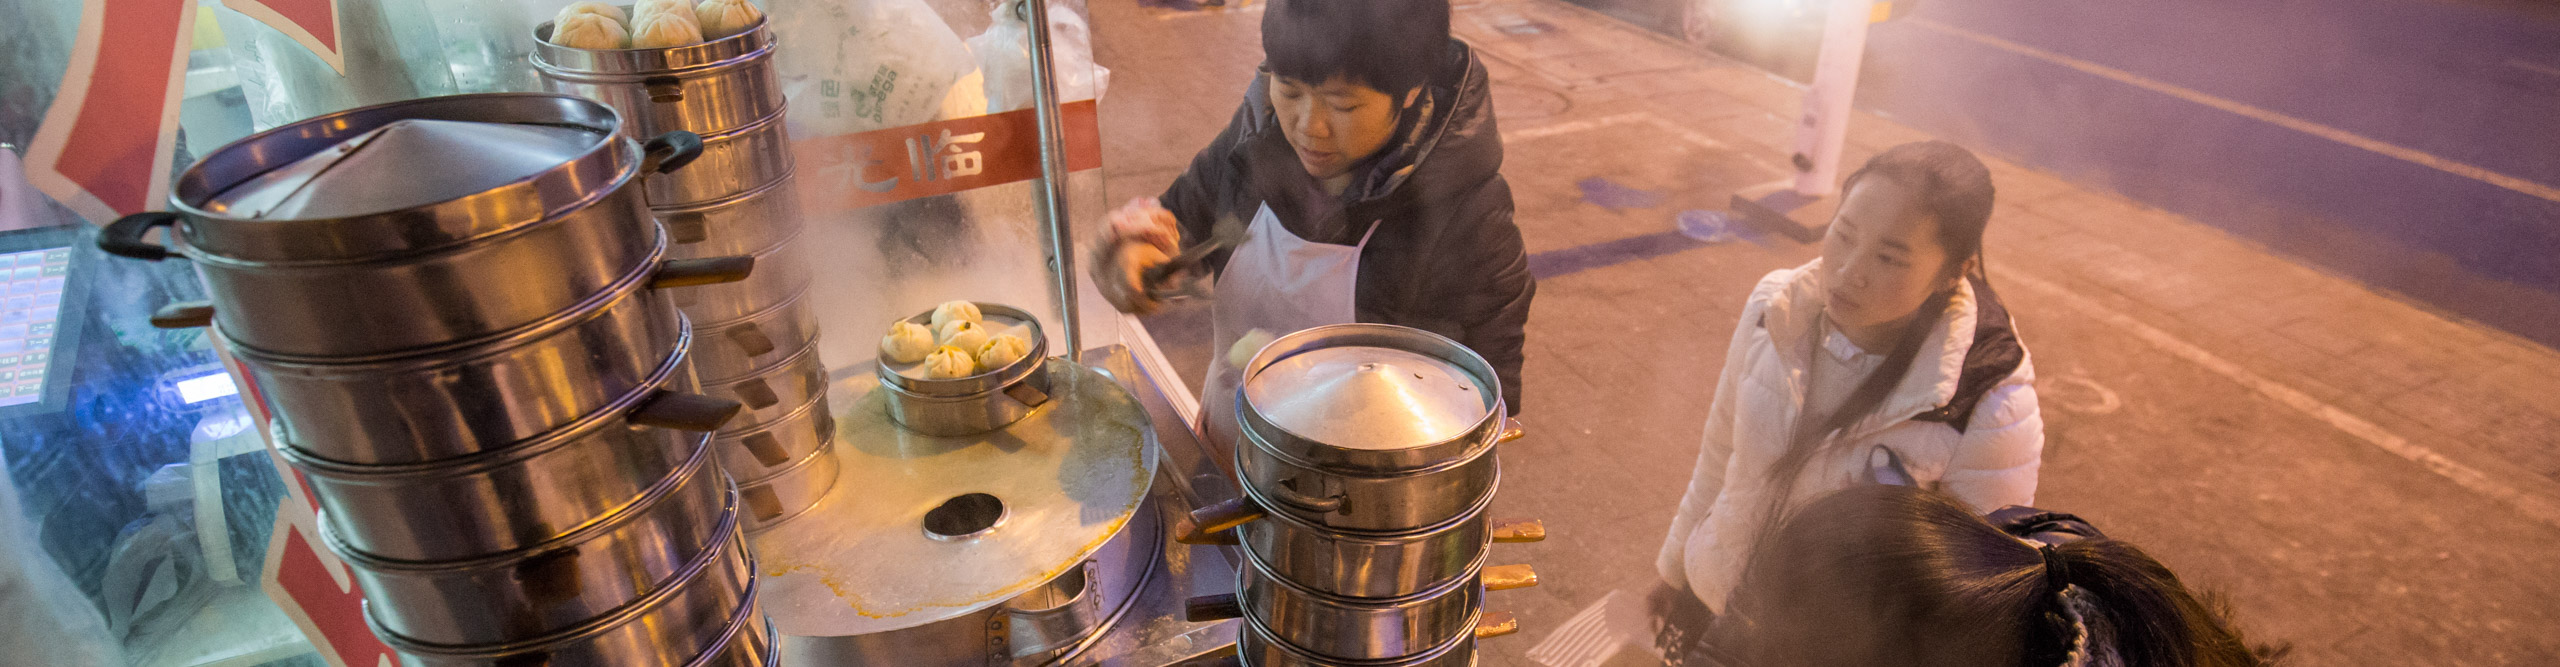 Woman serving food at the Chengdu night markets , China 